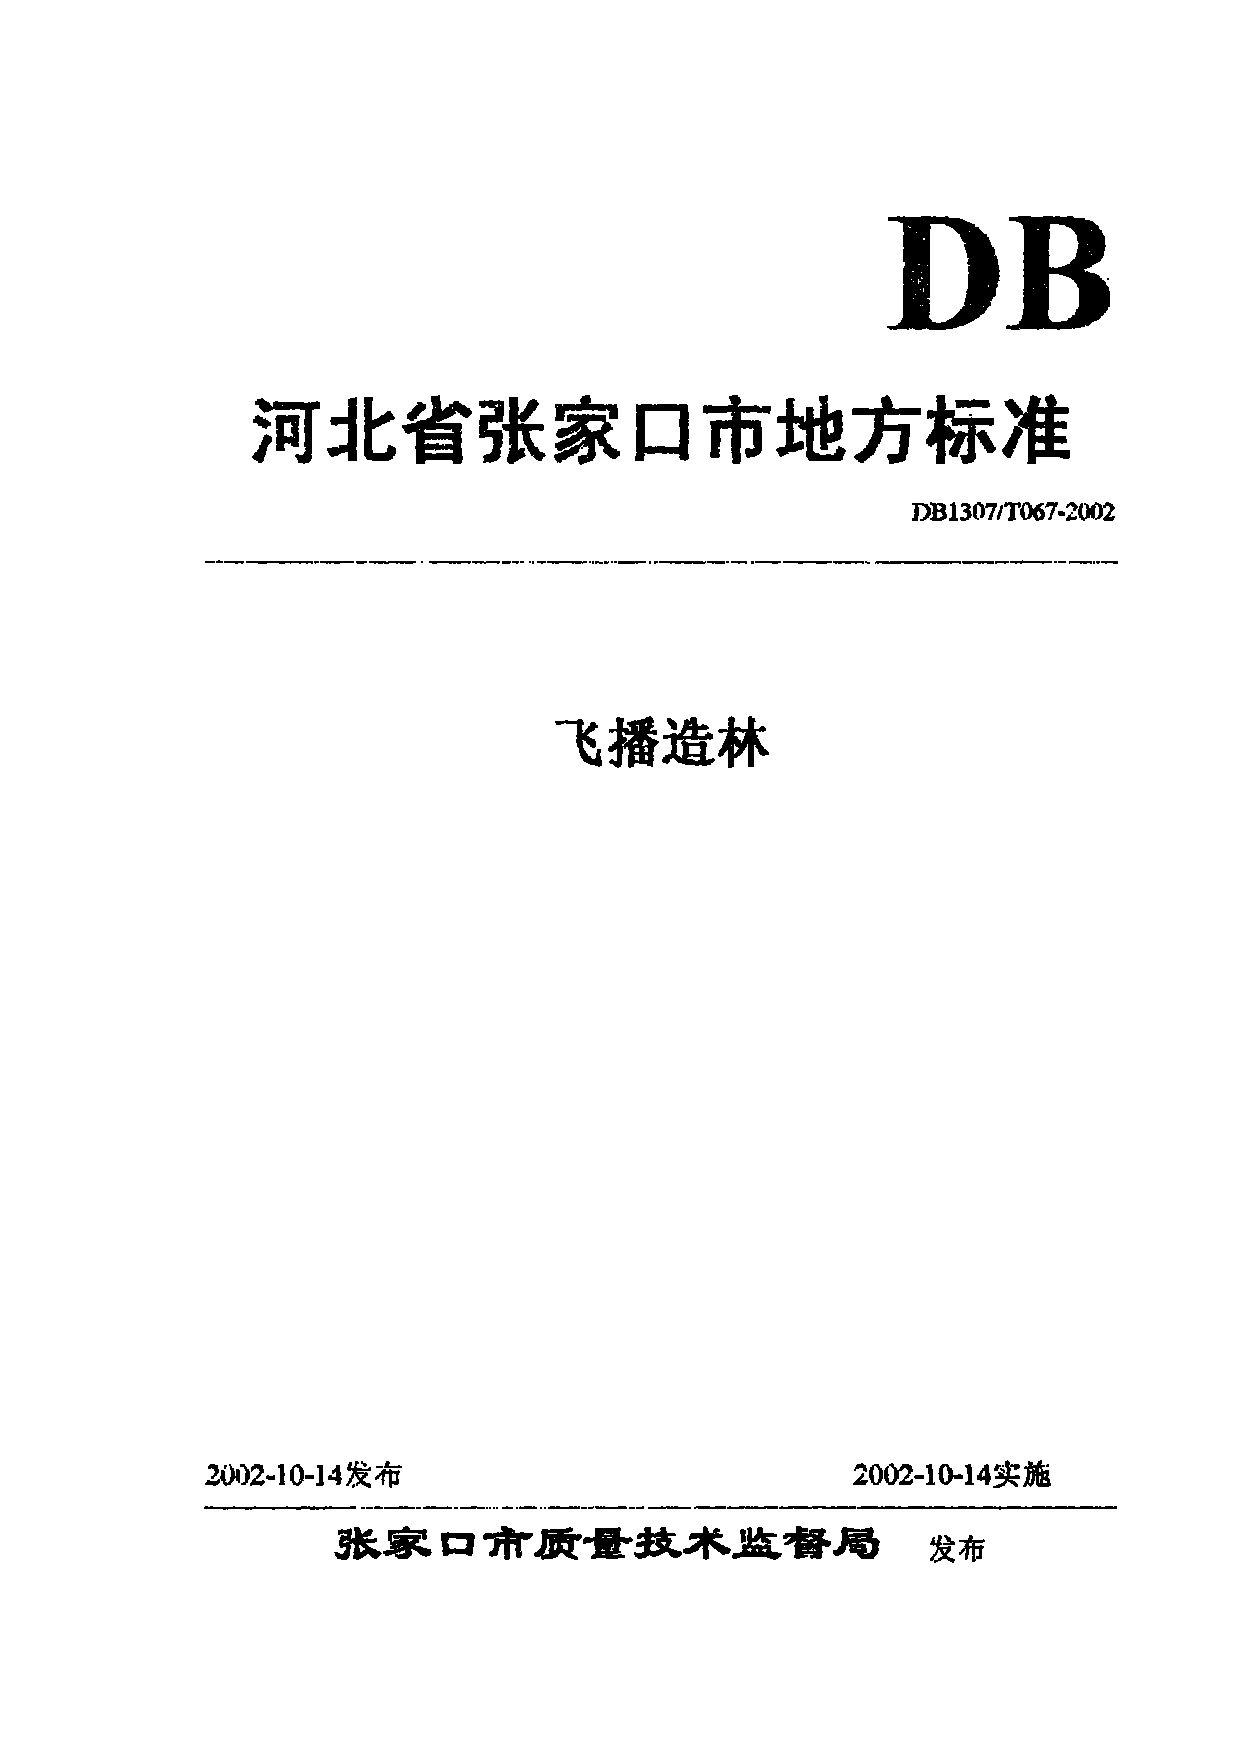 DB1307/T 067-2002